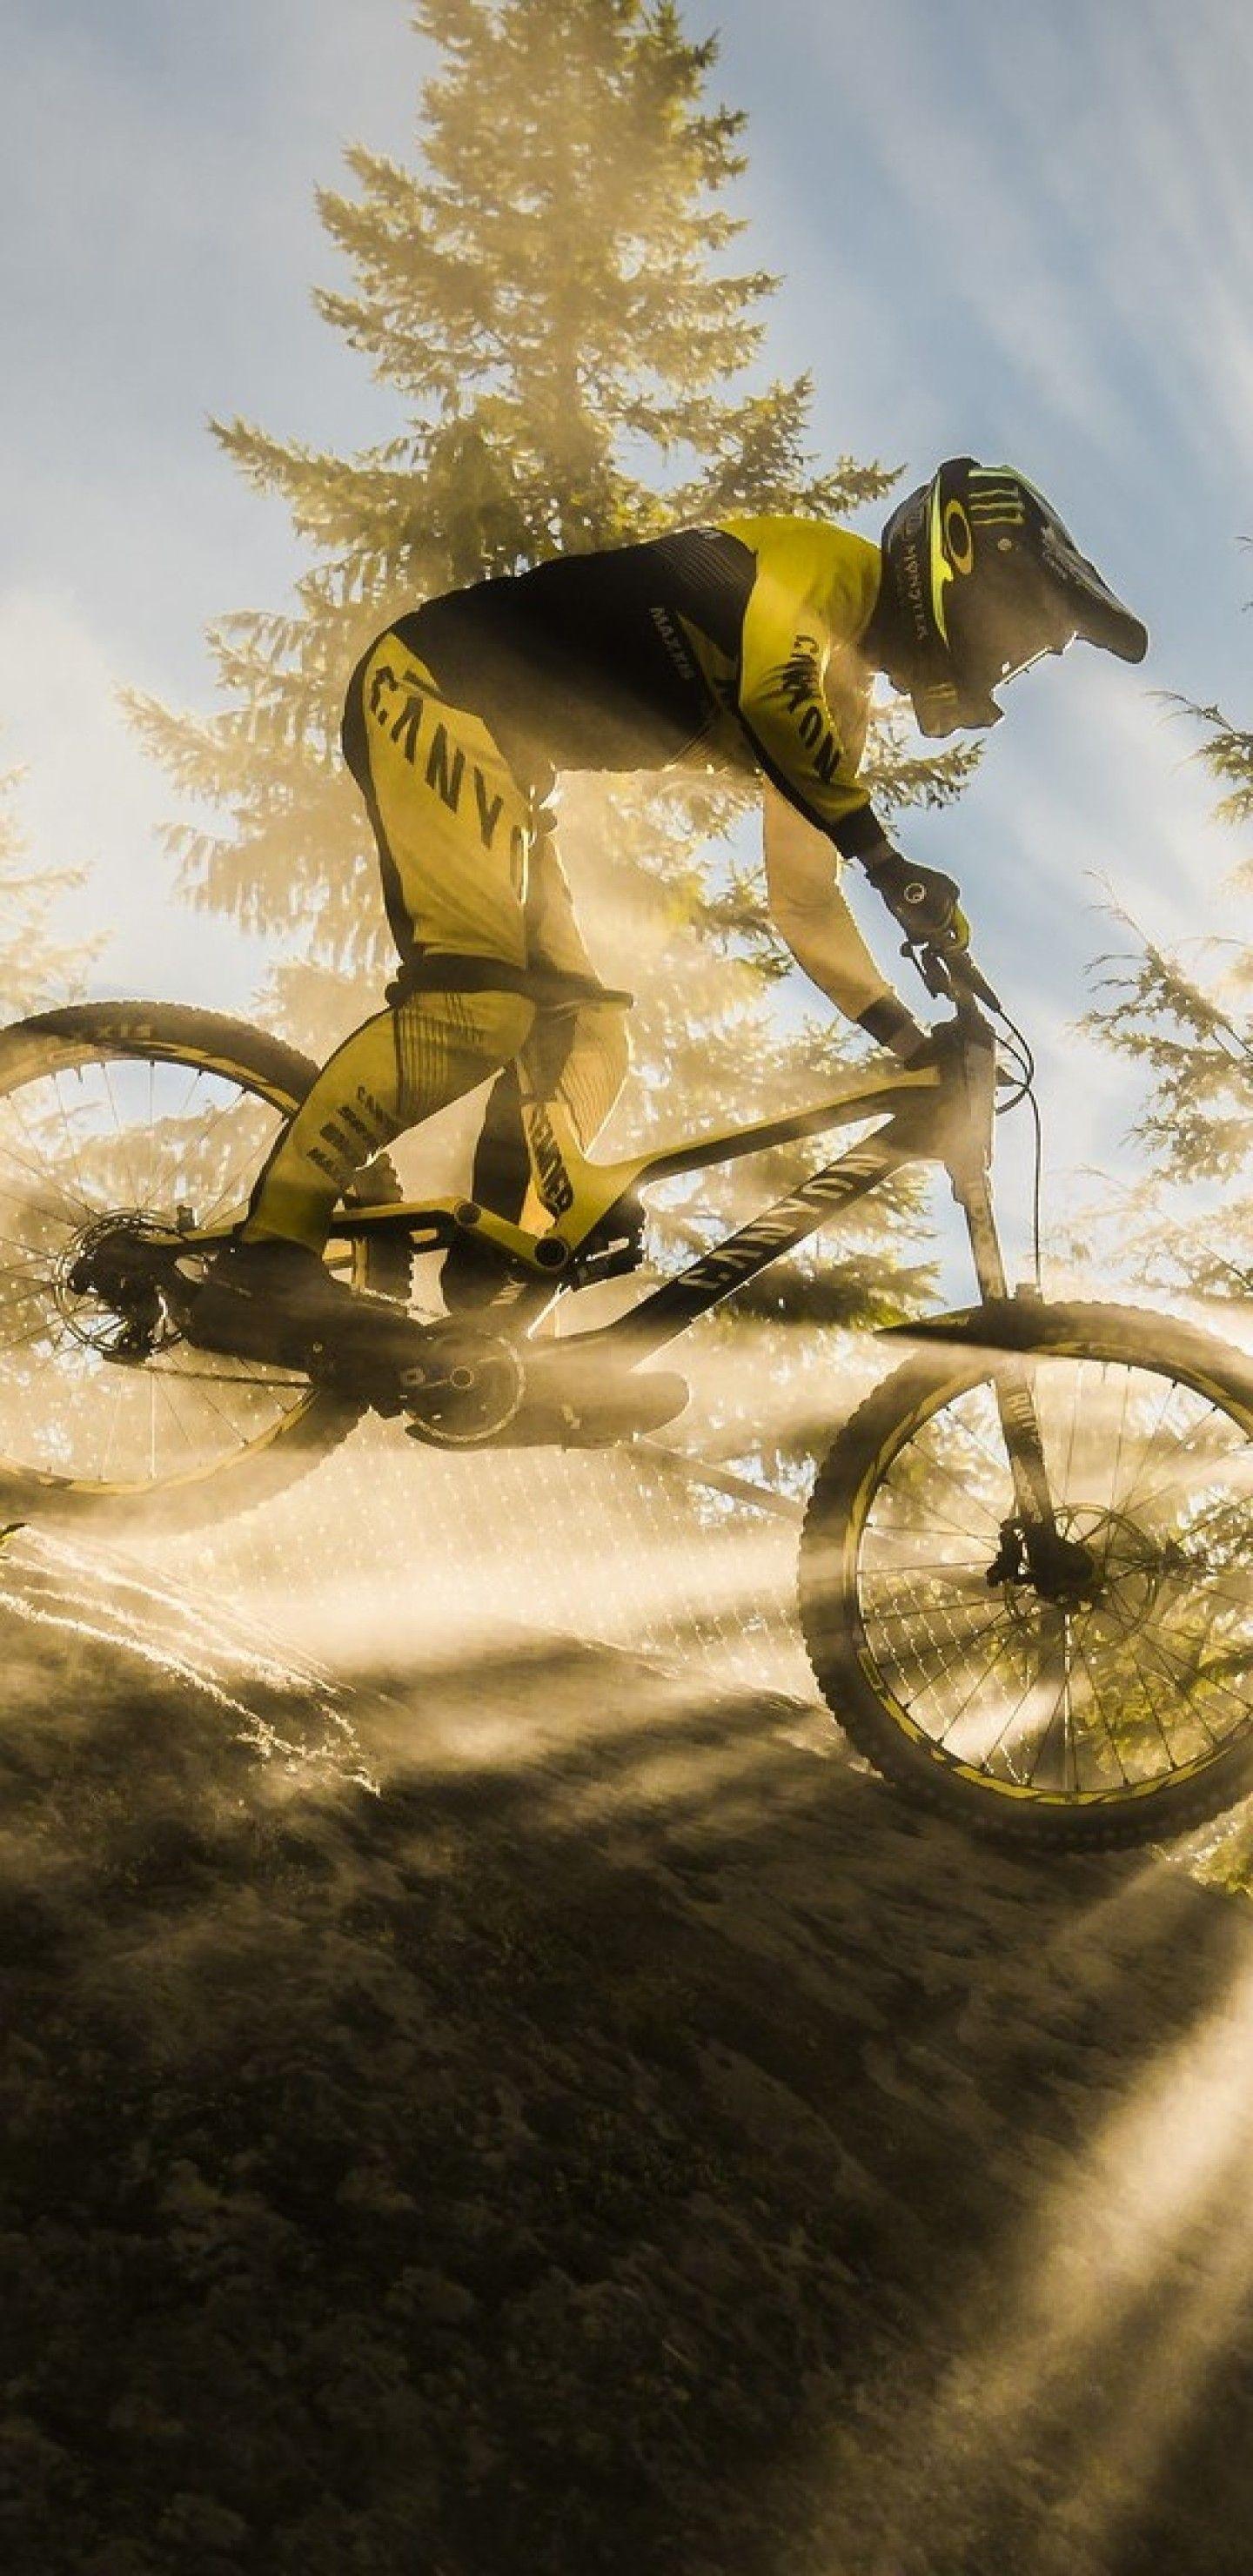 3000 Mountain Bike Stunt Stock Photos Pictures  RoyaltyFree Images   iStock